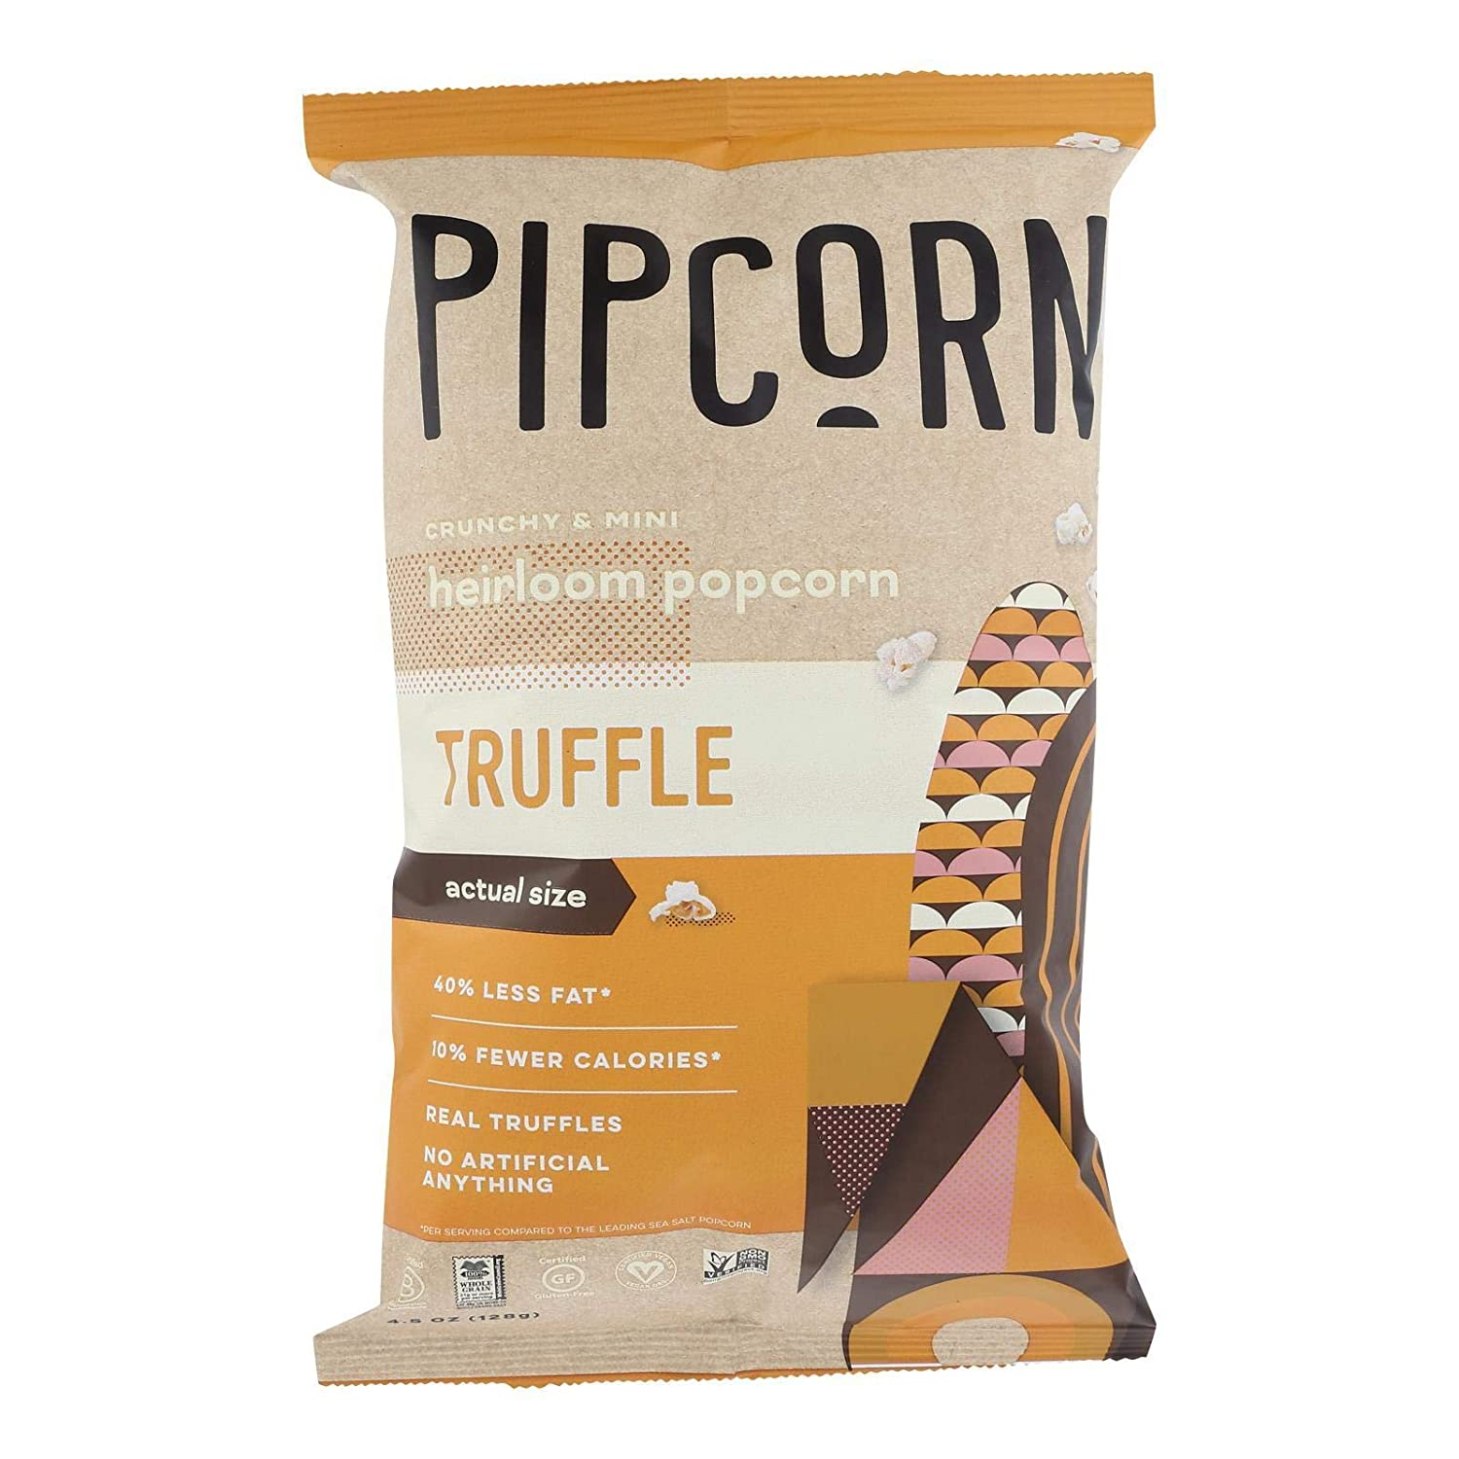 pipcorn truffle popcorn